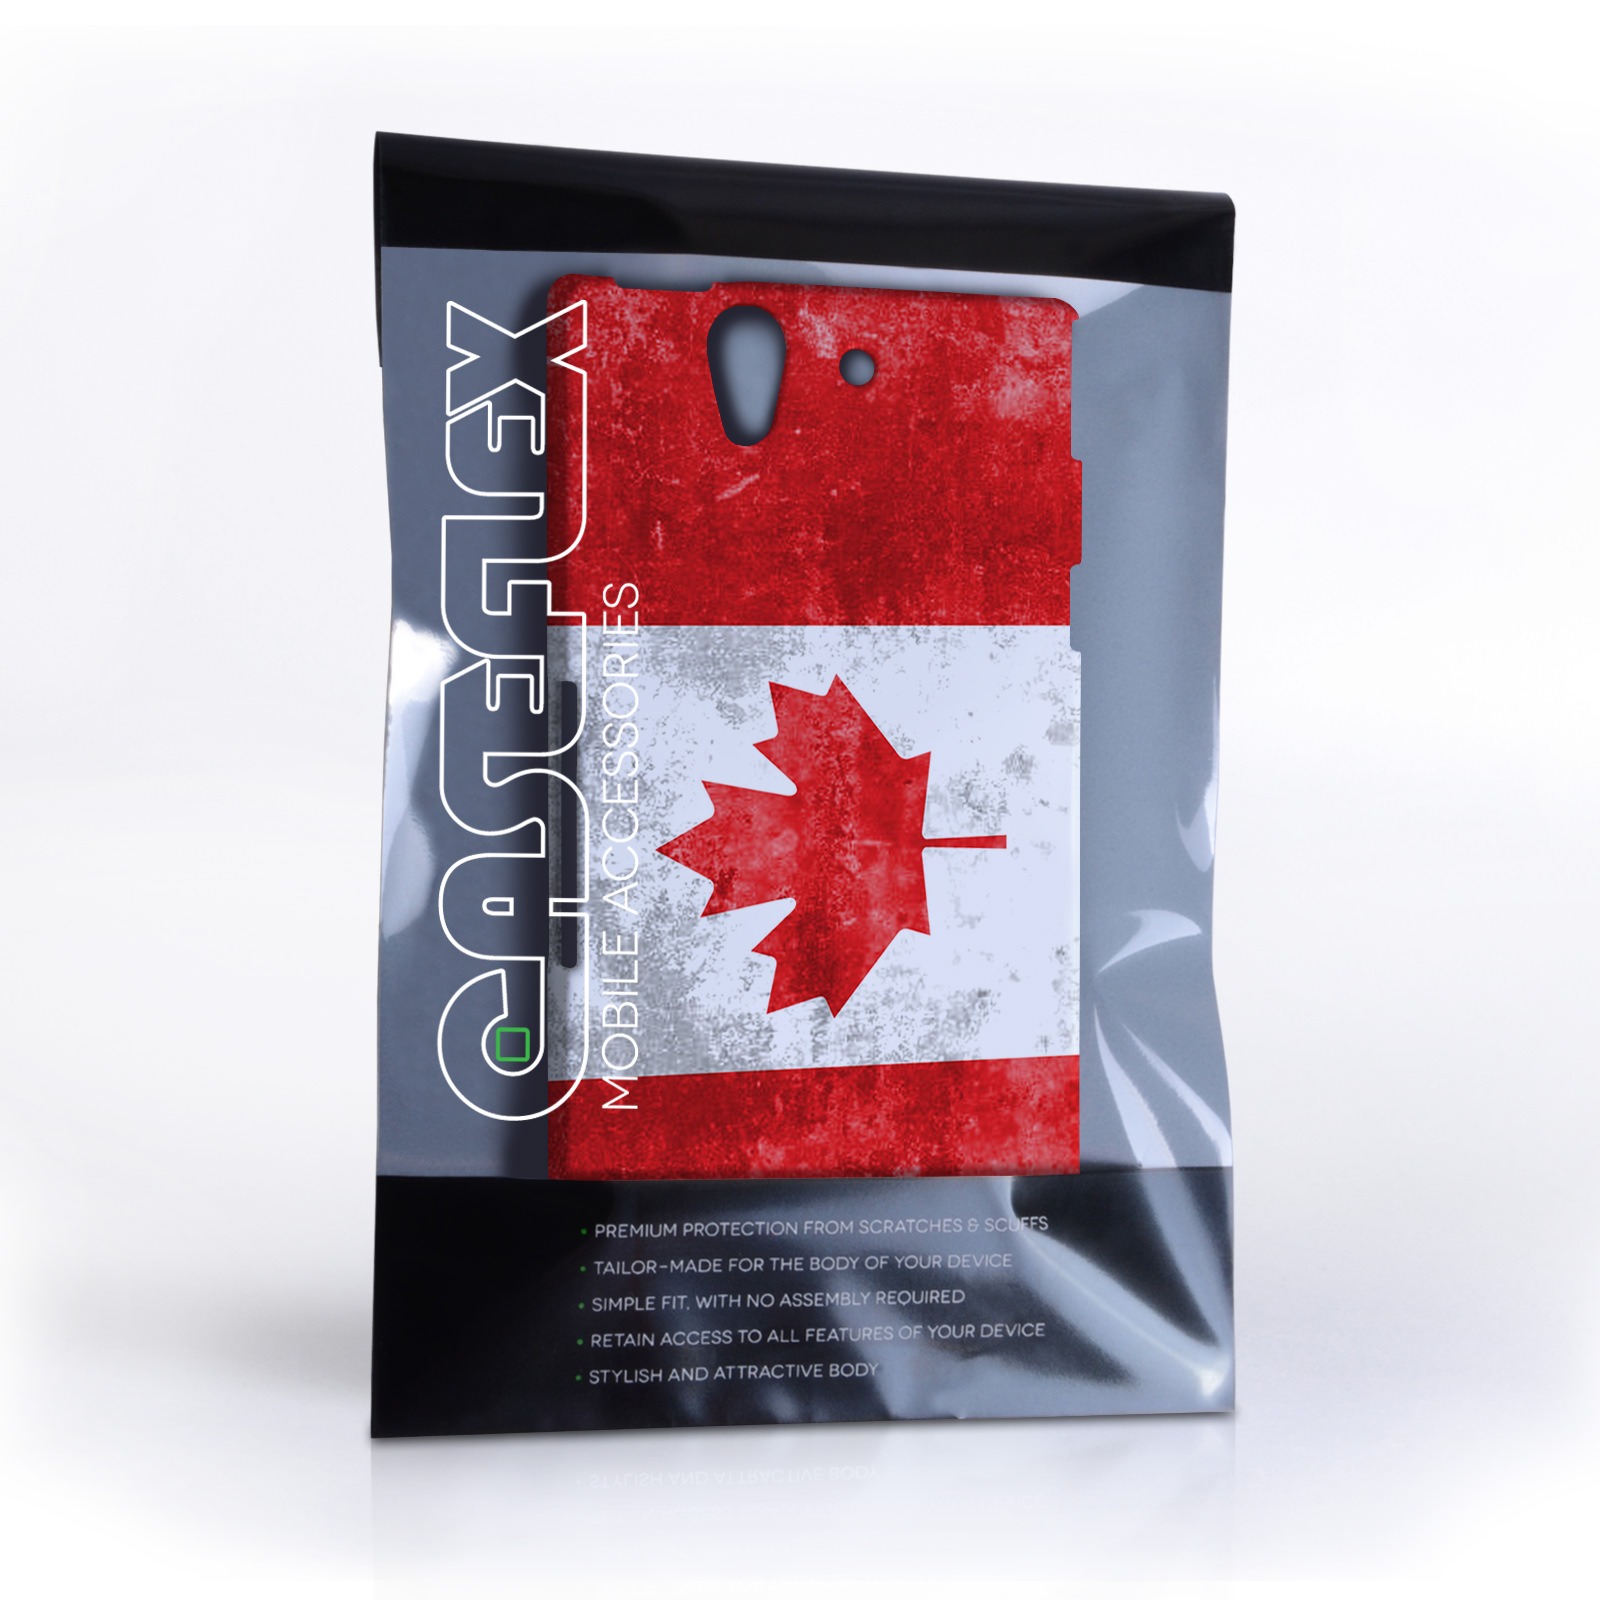 Caseflex Sony Xperia Z Retro Canada Flag Case